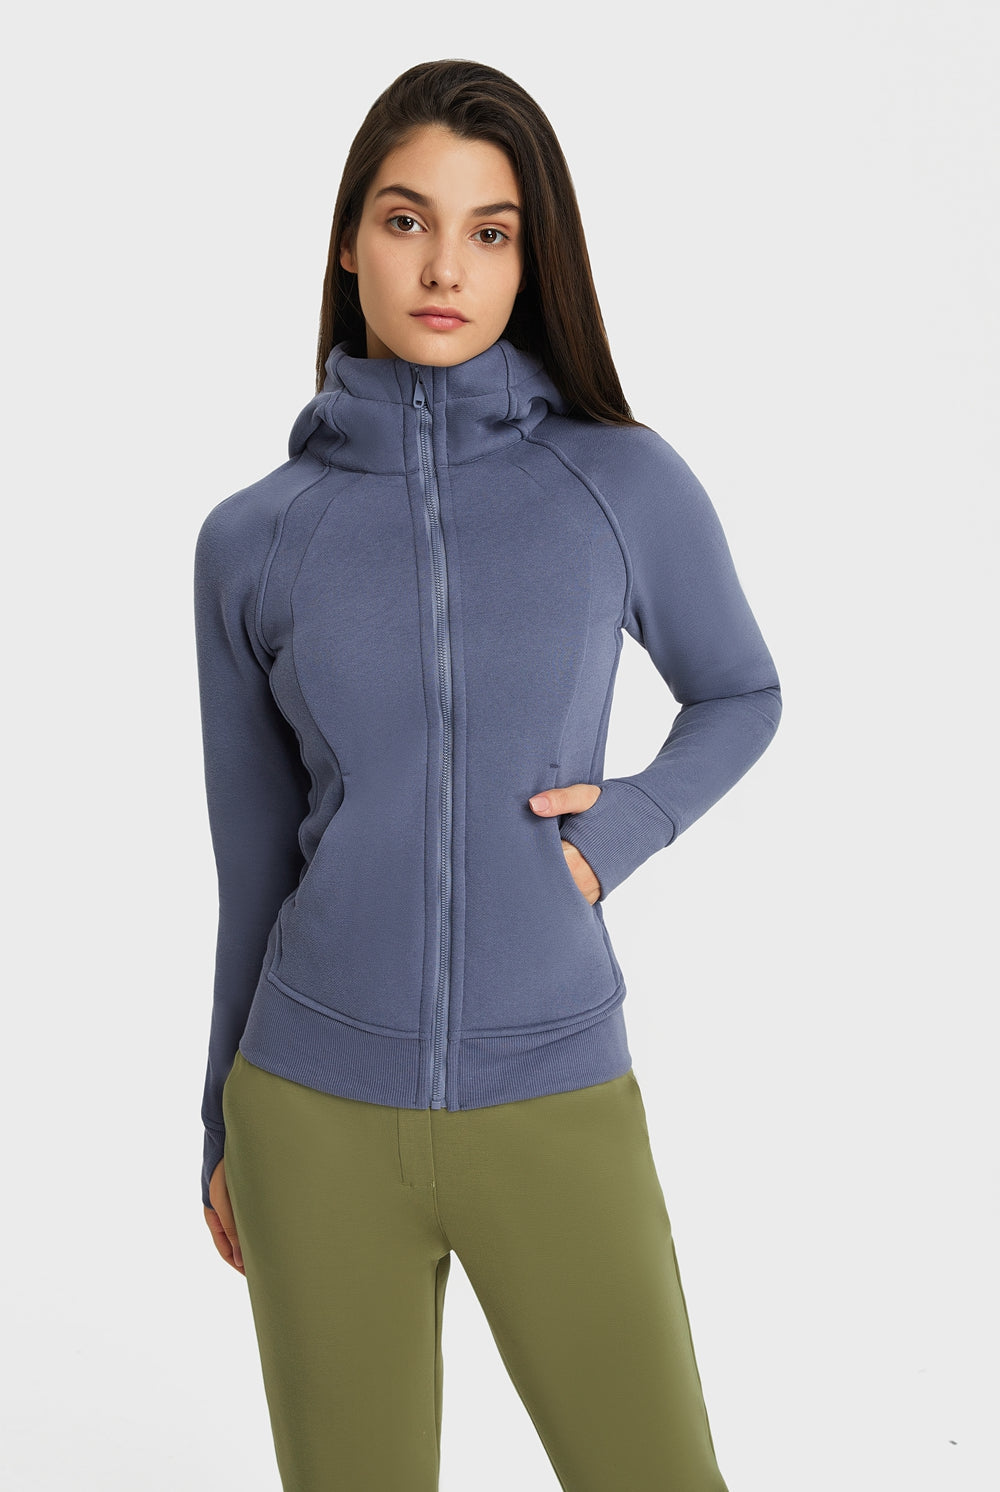 Dim Gray Progress Not Perfection Zip Up Seam Detail Hooded Sports Jacket activewear